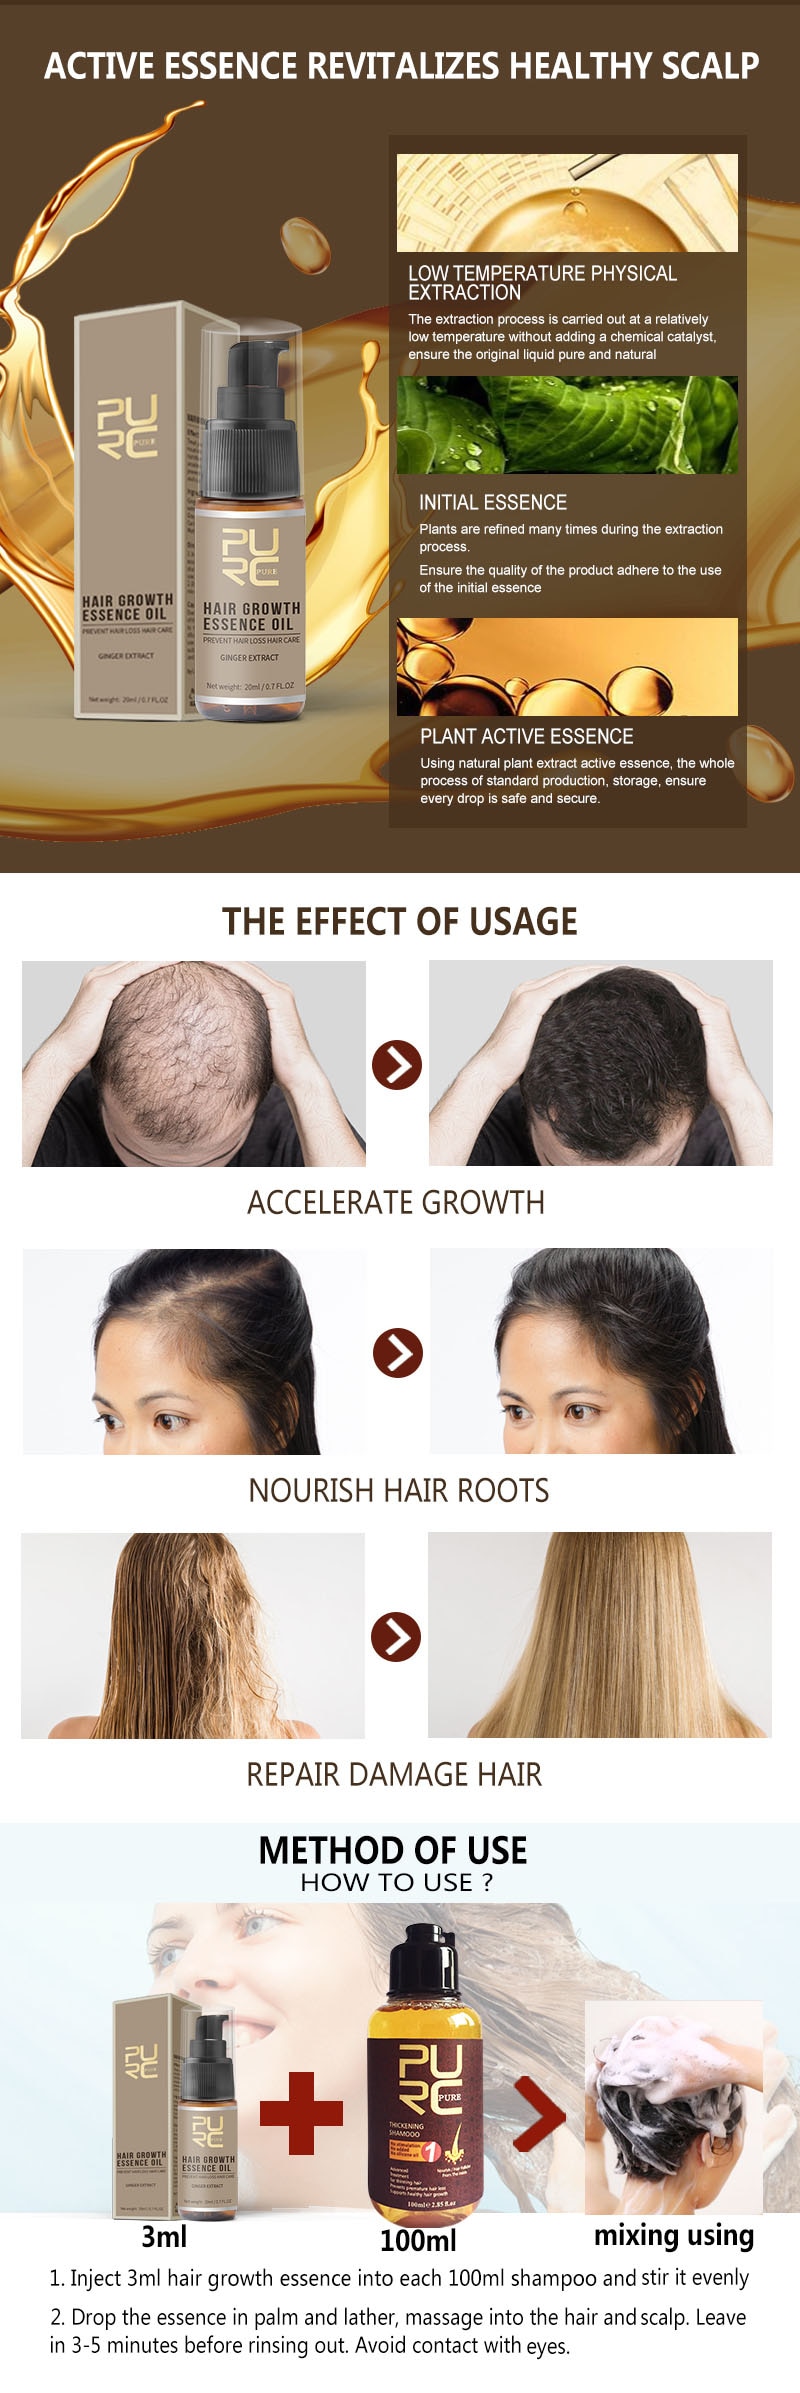 PURC Hot sale Fast Hair Growth Essence Oil Hair Loss Treatment Help for hair Growth Hair Care 20ml